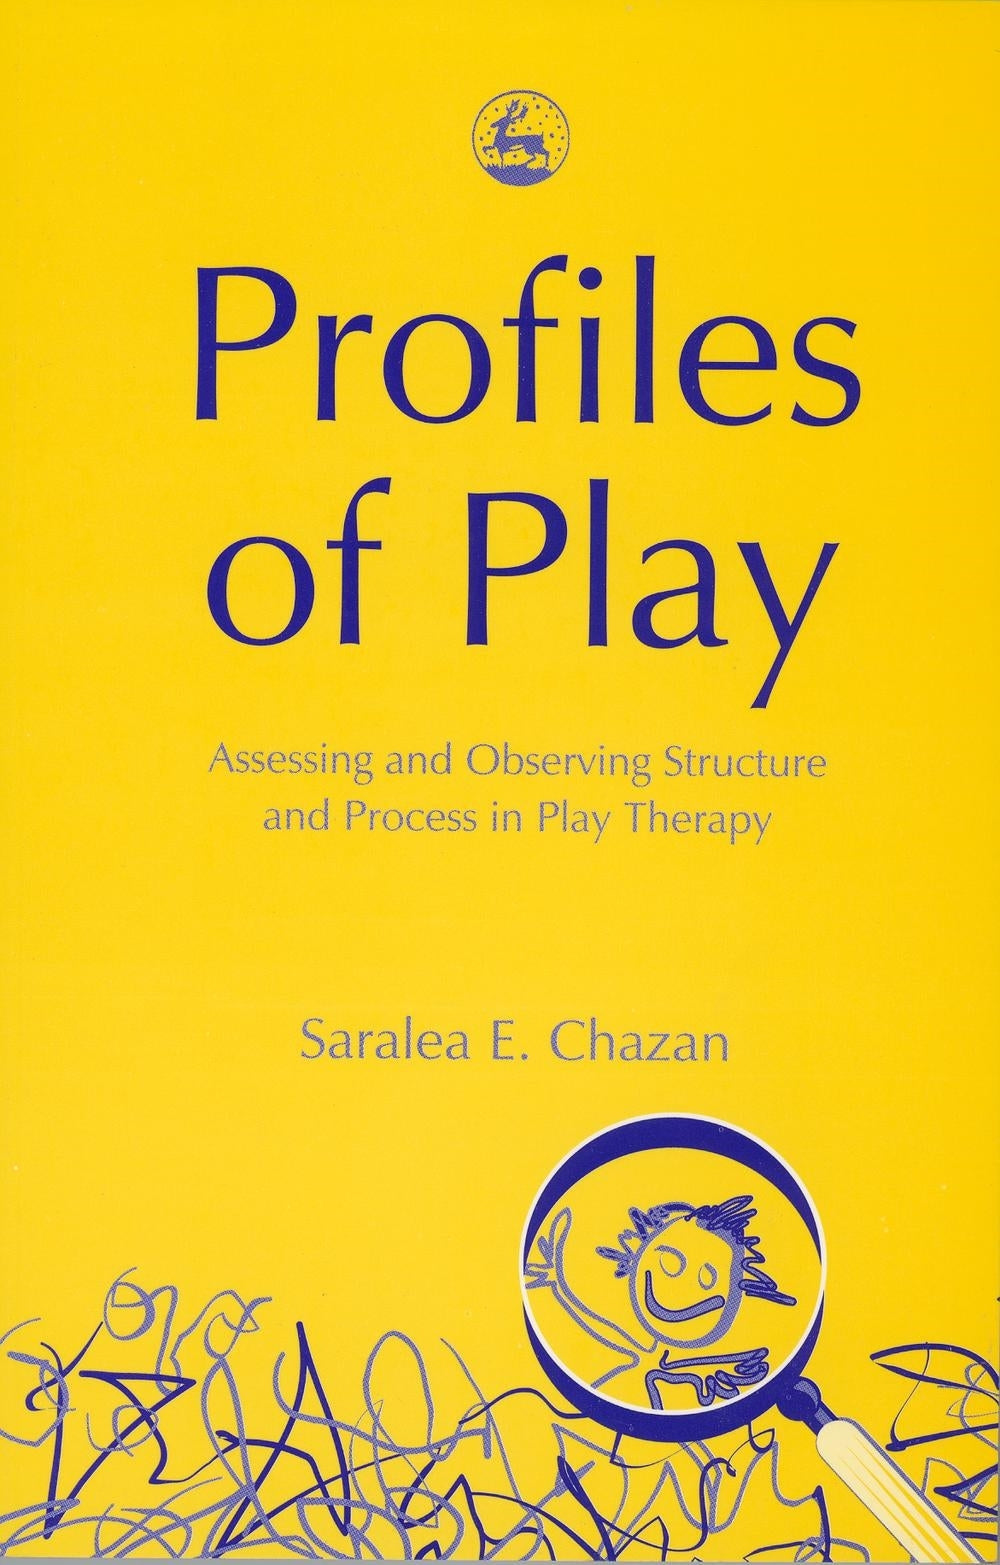 Profiles of Play by Saralea Chazan